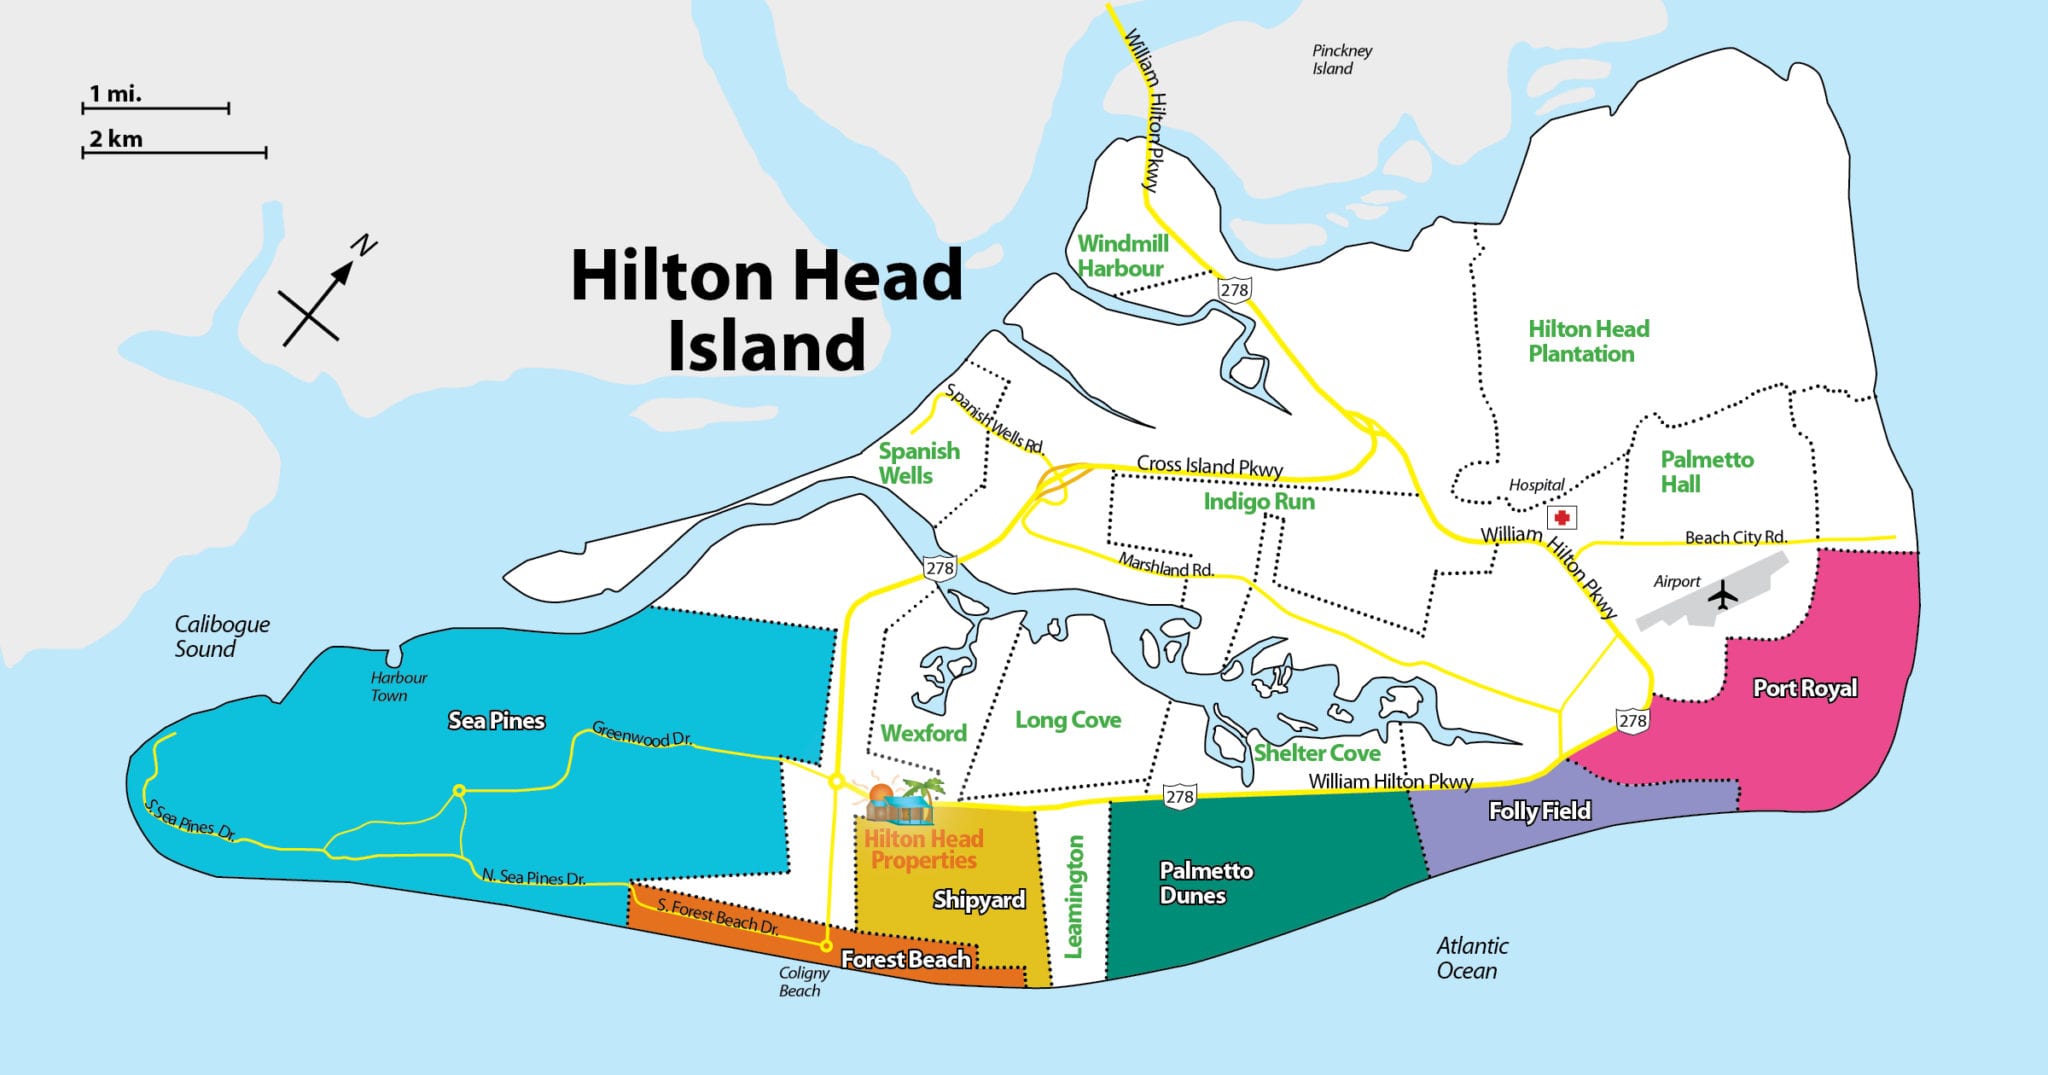 Hilton head island map carolina south maps beach north beaches sc florida oriental location hiltonheadisland wikipedia choose board where located